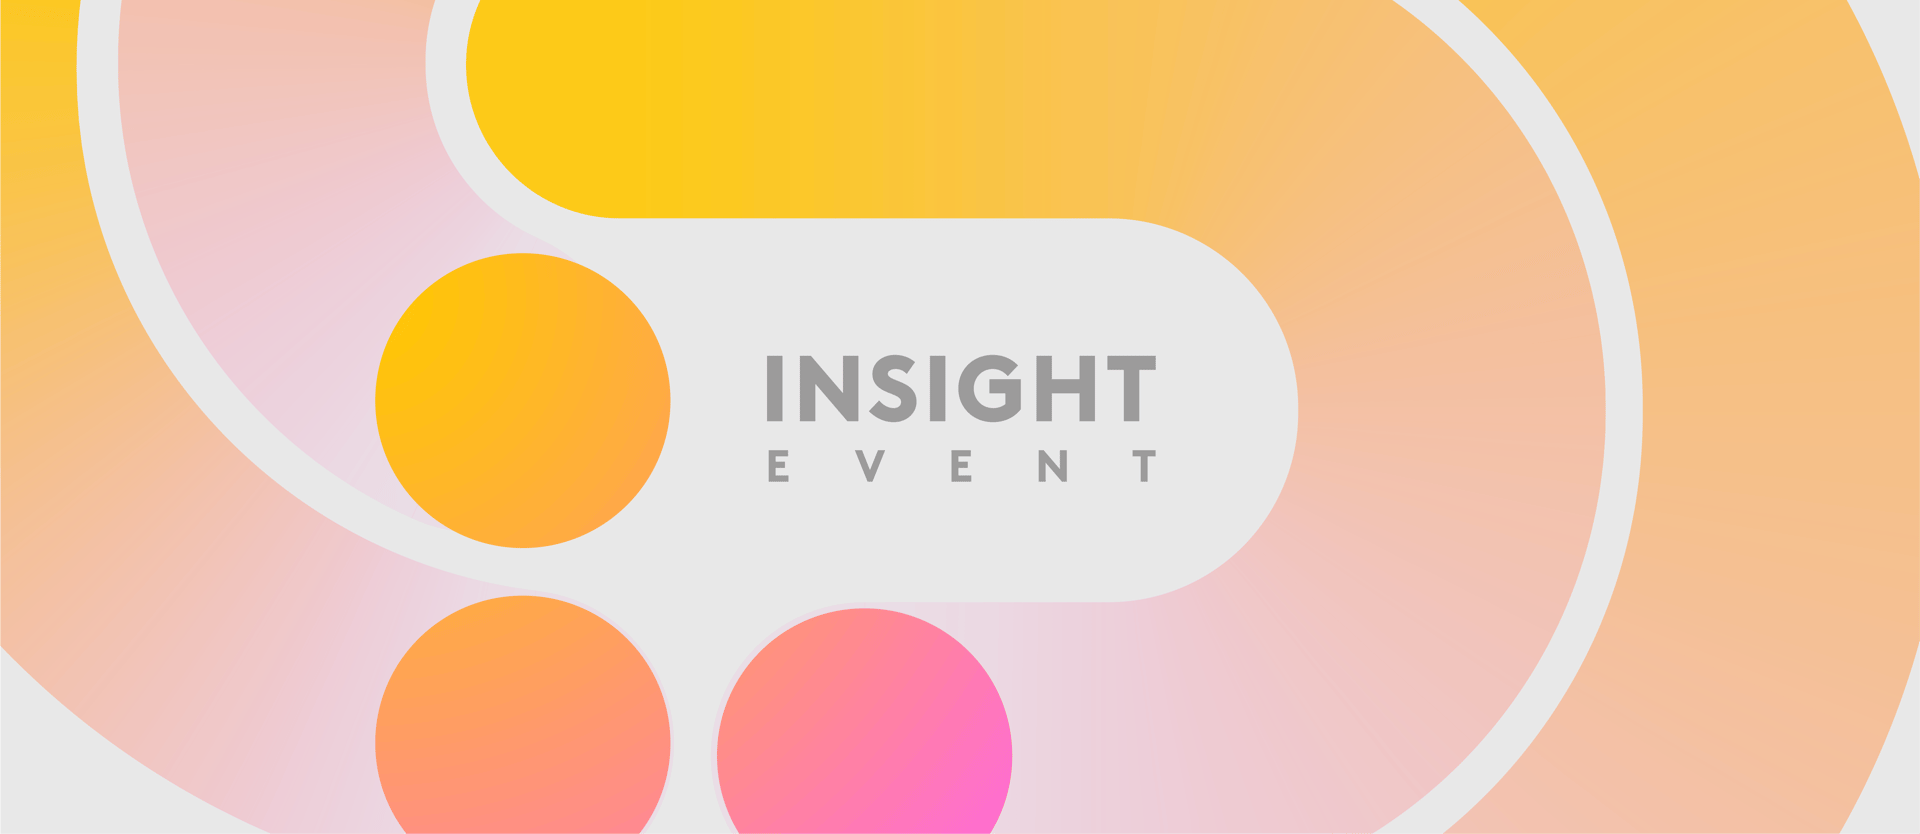 Insight Event_Artwork Template 2 2 2-29-2